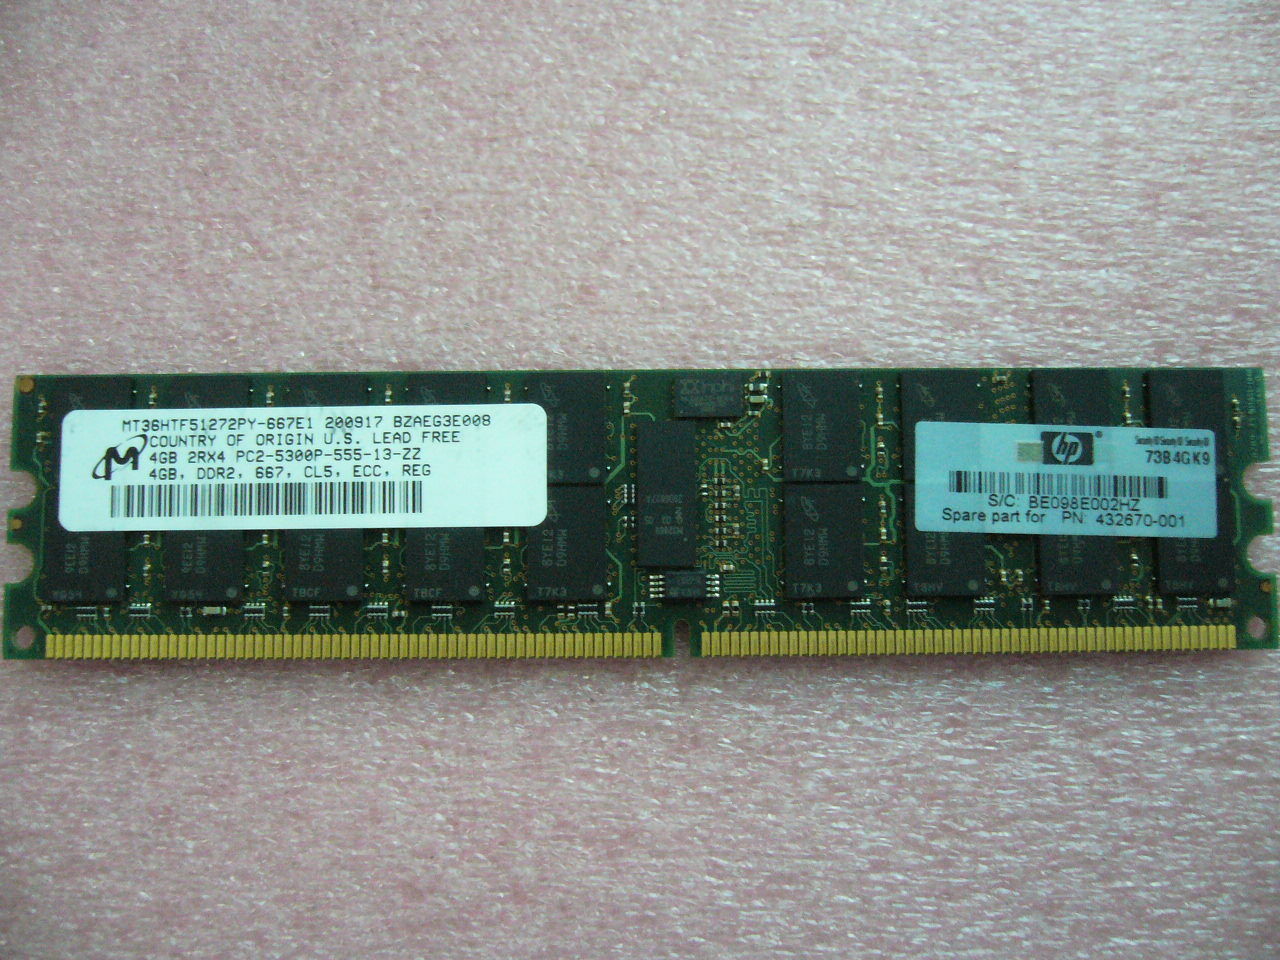 QTY 1x 4GB PC2-5300P 2Rx4 DDR2 667MHz ECC Registered Memory HP P/N 432670-001